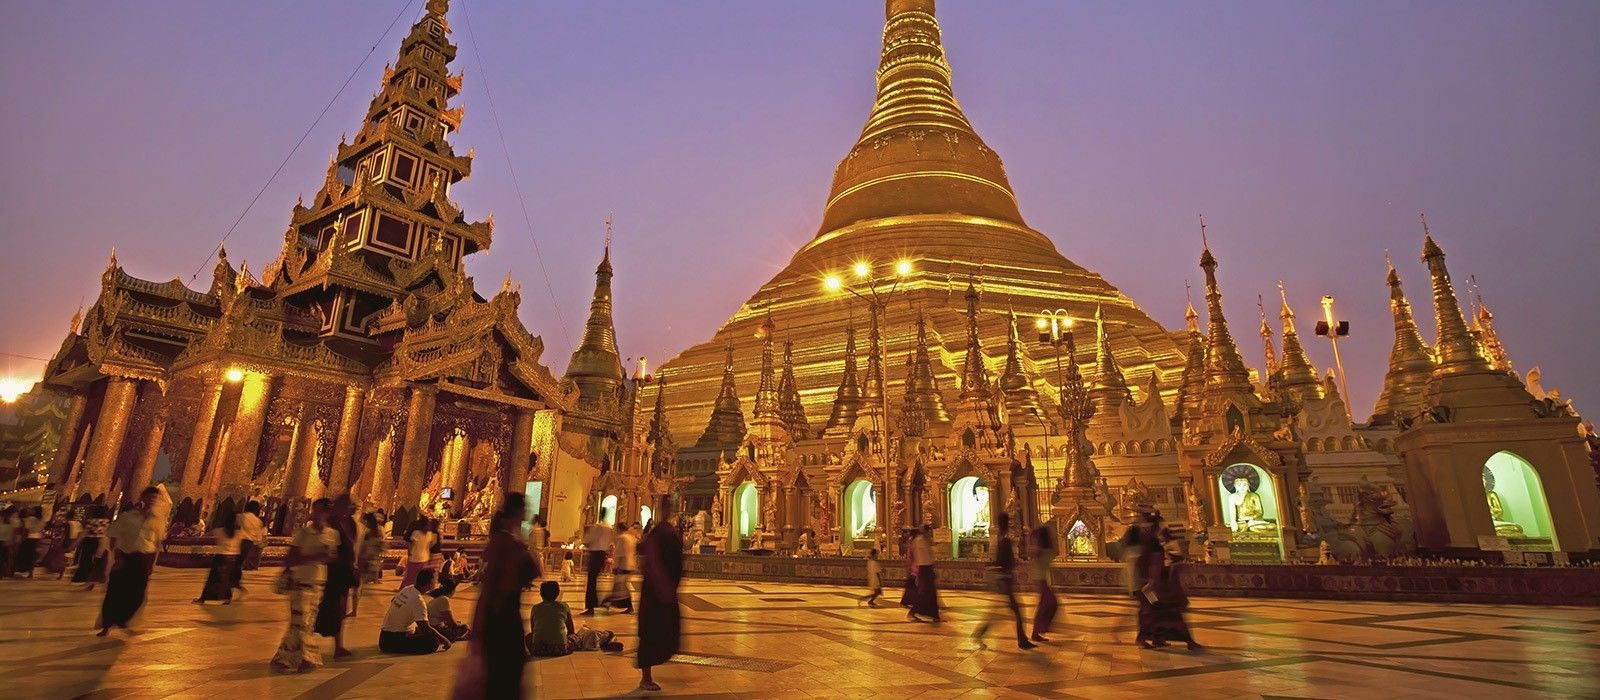 Exclusive Travel Tips For Your Destination Yangon In Myanmar - 